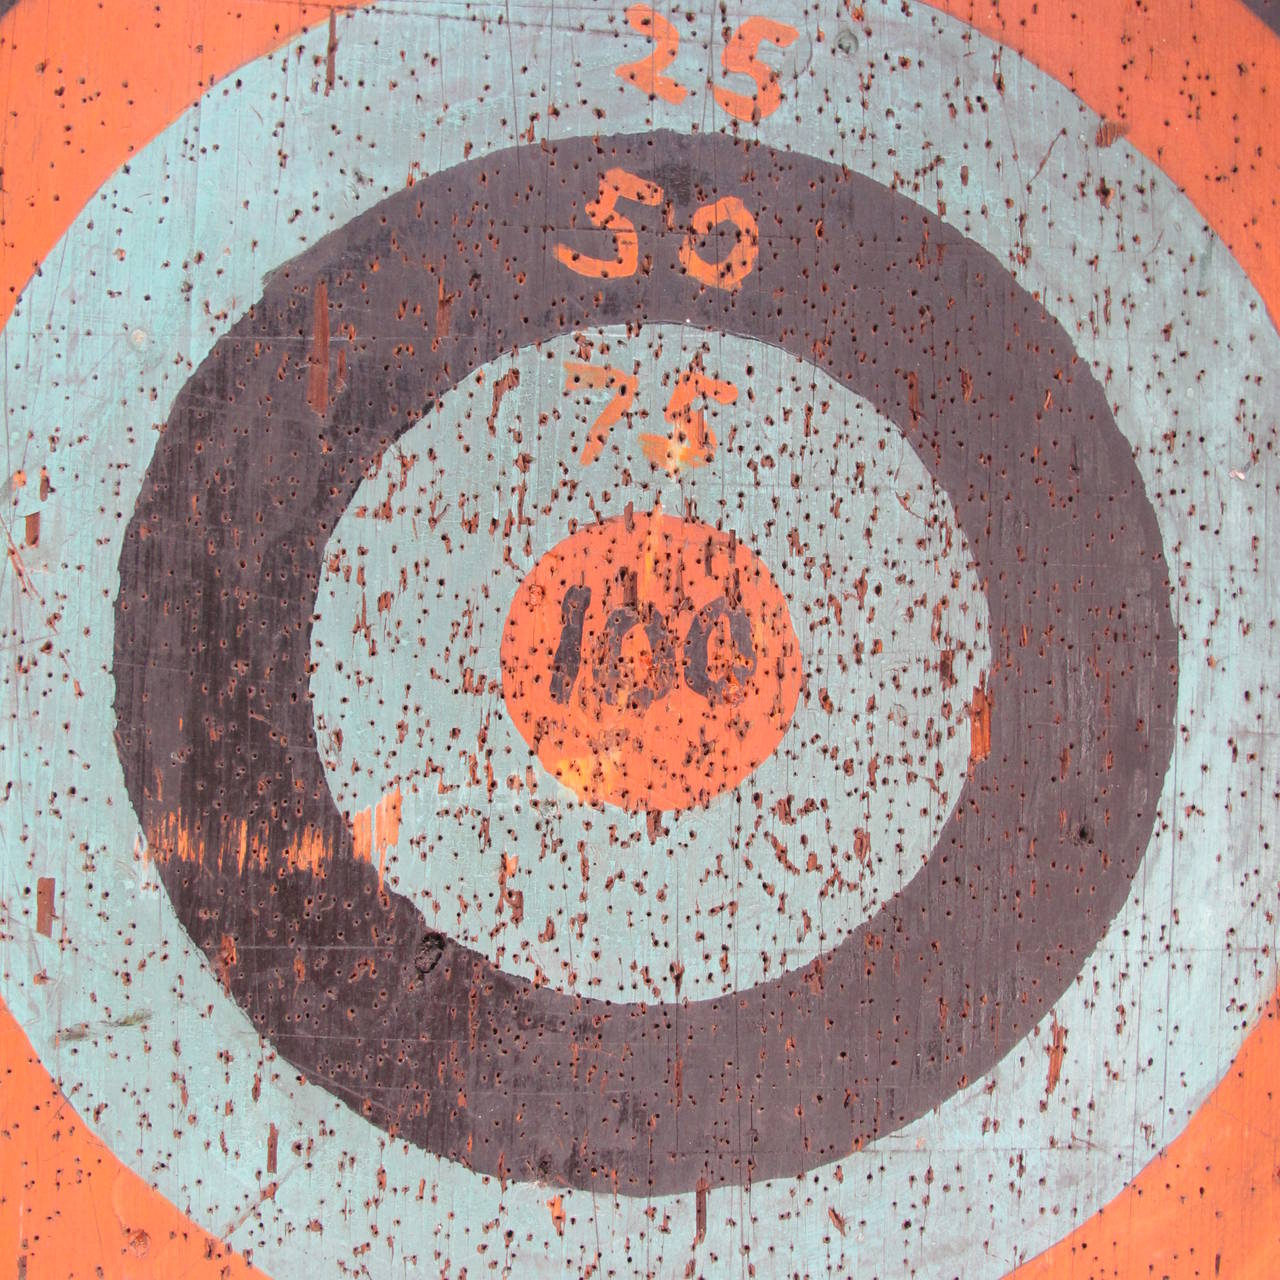 American Bull's-Eye Target Dartboard